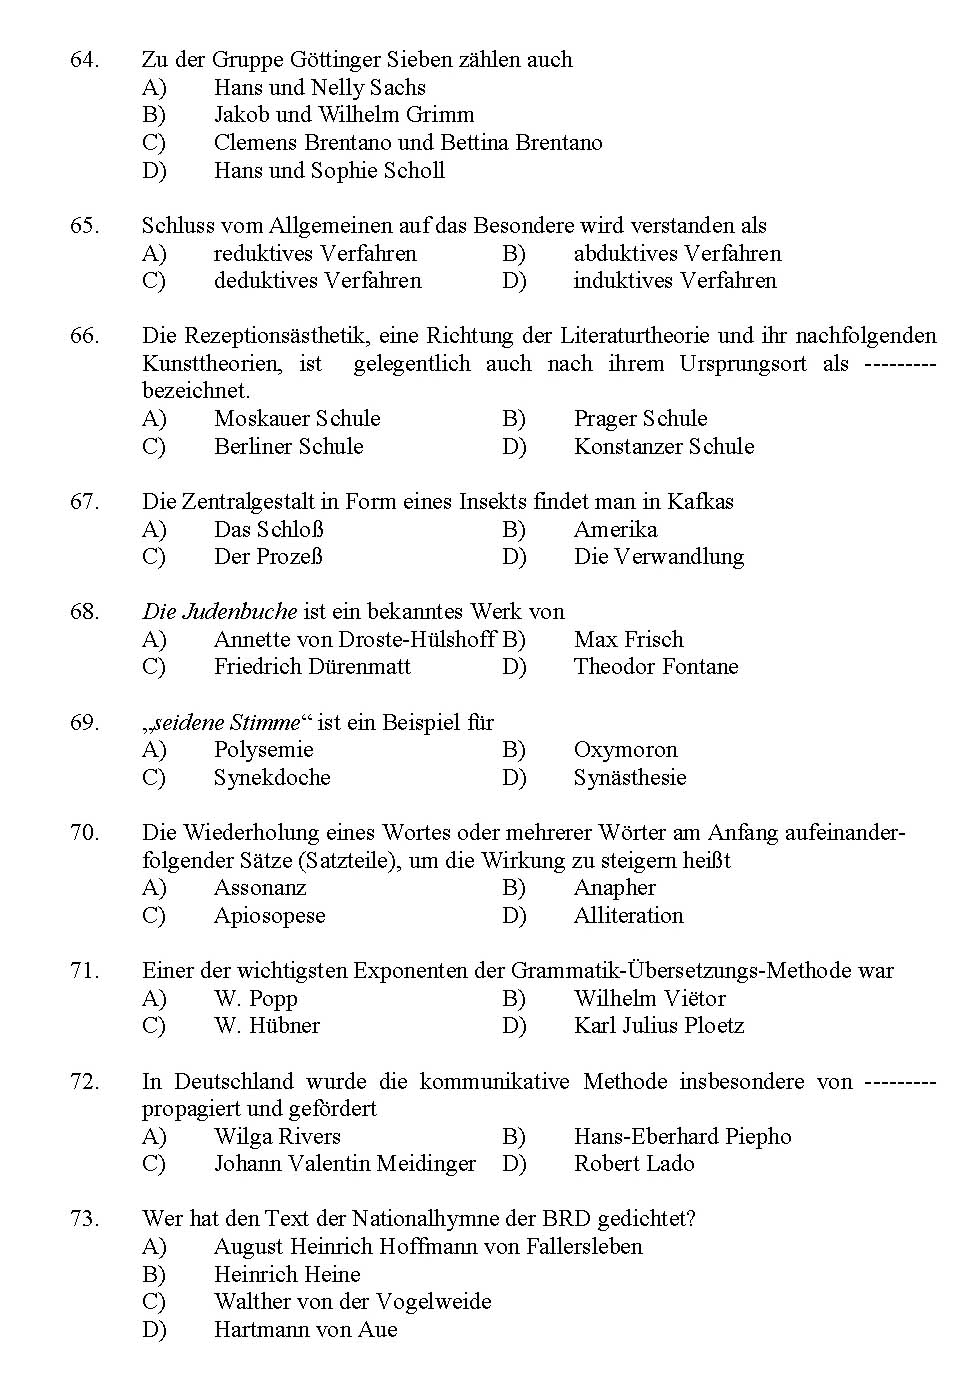 Kerala SET German Exam 2012 Question Code 12912 9